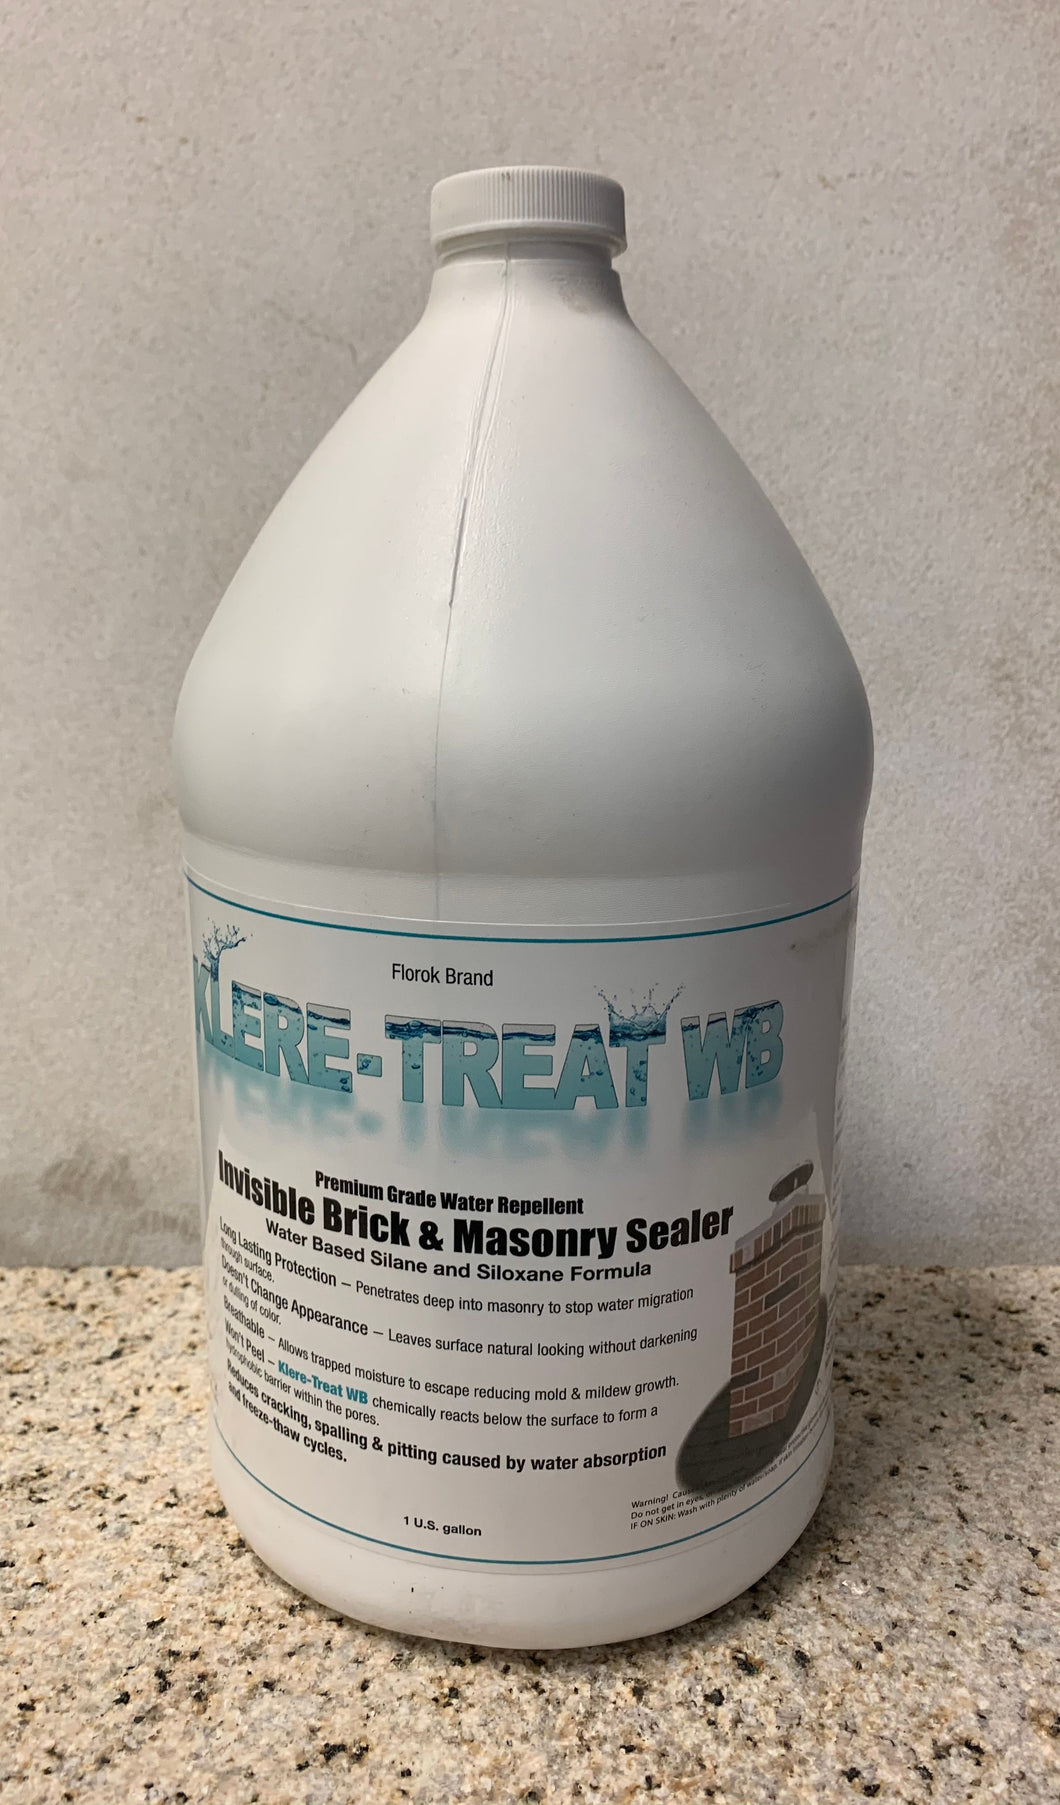 Klere-Treat WB – Premium Grade Water Repellent